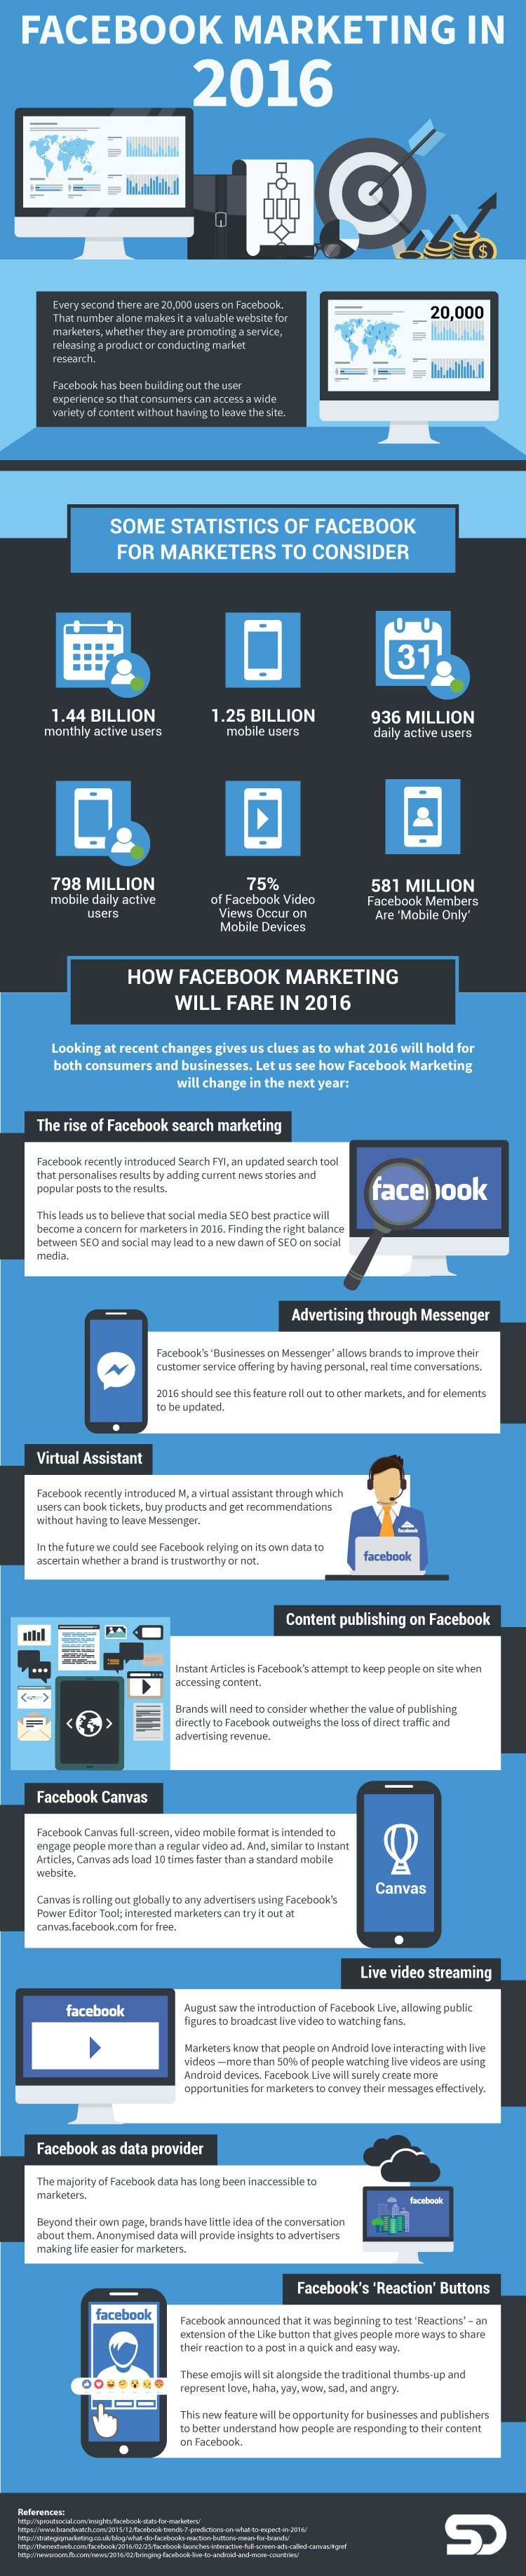 Facebook Marketing in 2016